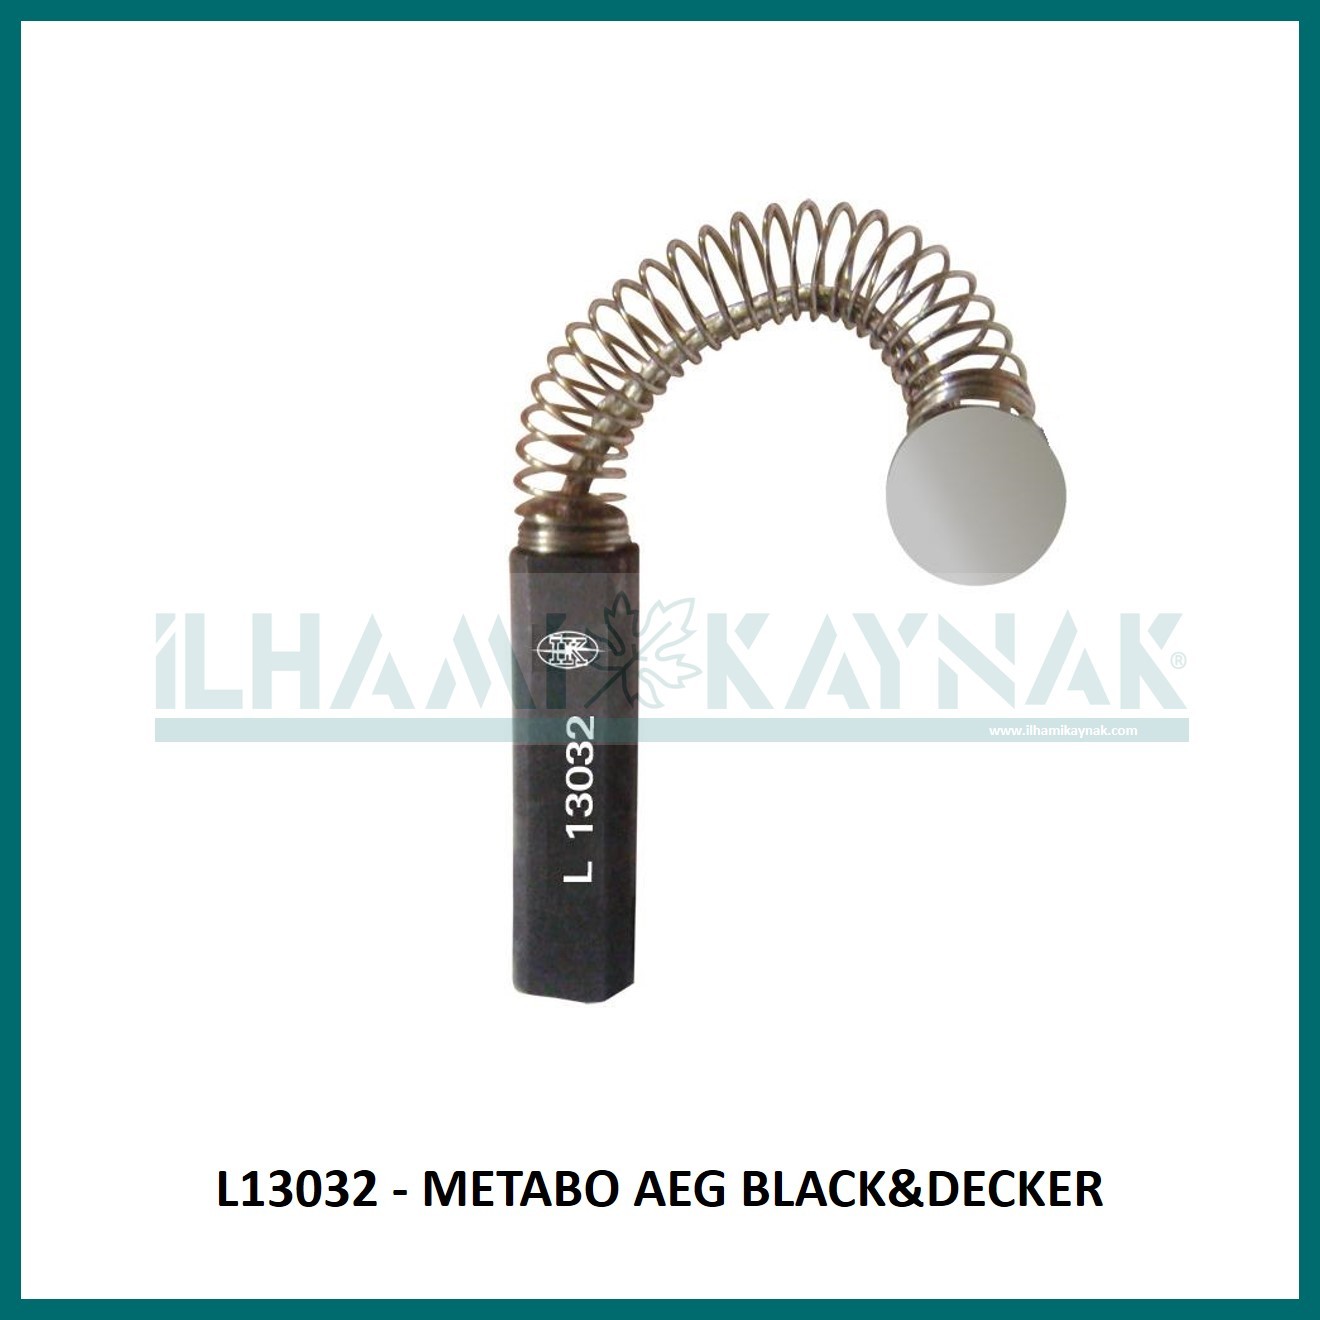 L13032 - METABO AEG BLACK&DECKER - 5*5*25 mm - Minimum Satın Alım: 10 Adet